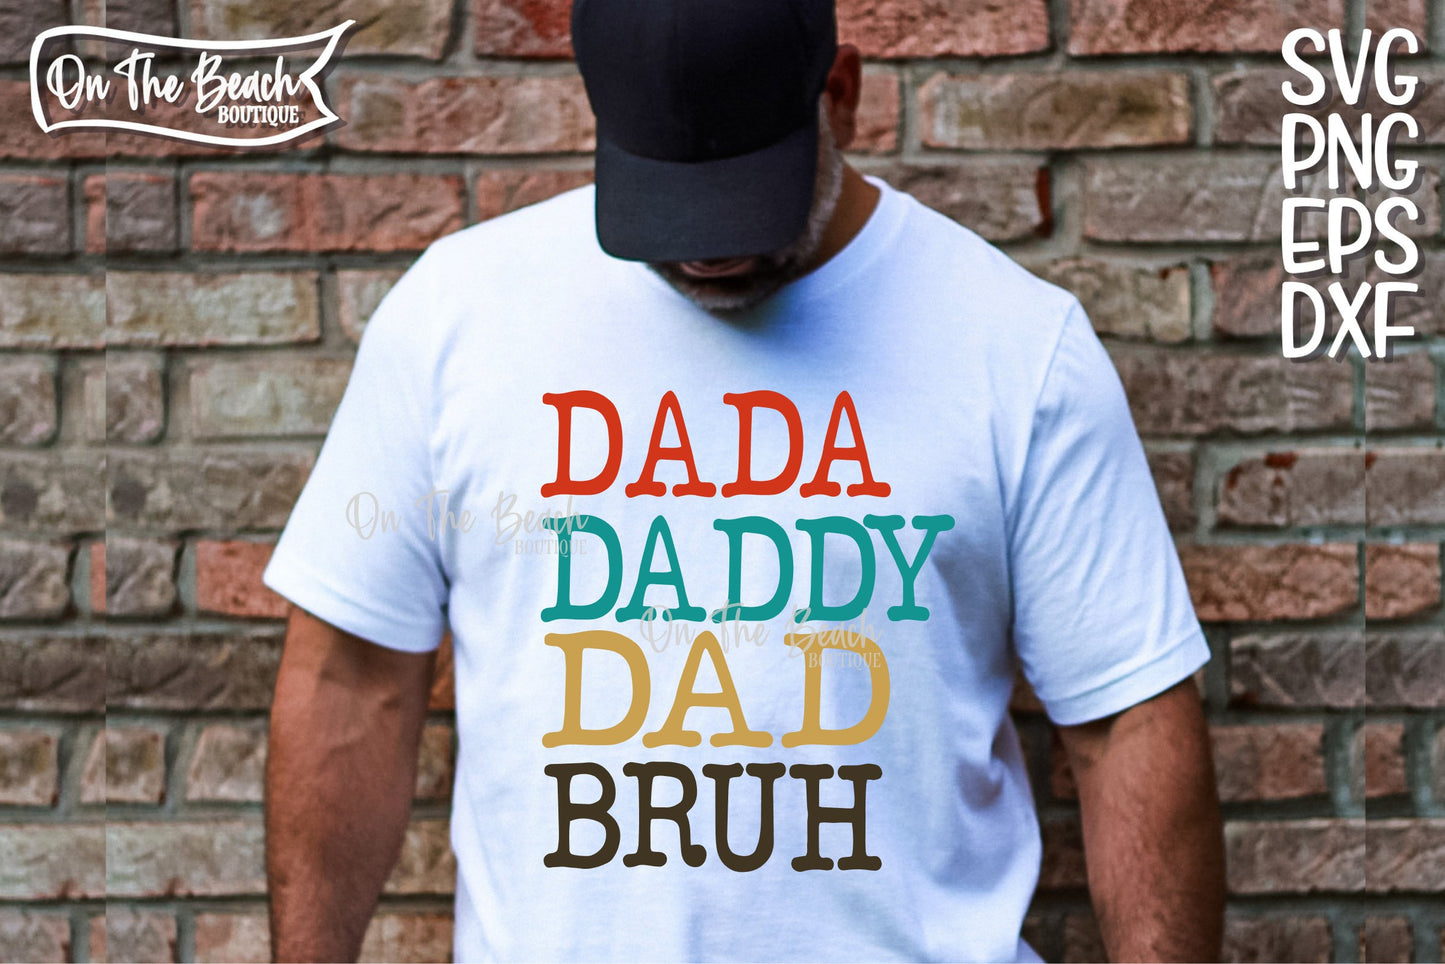 Baseball papa, Dad t-shirt design - free svg file for members